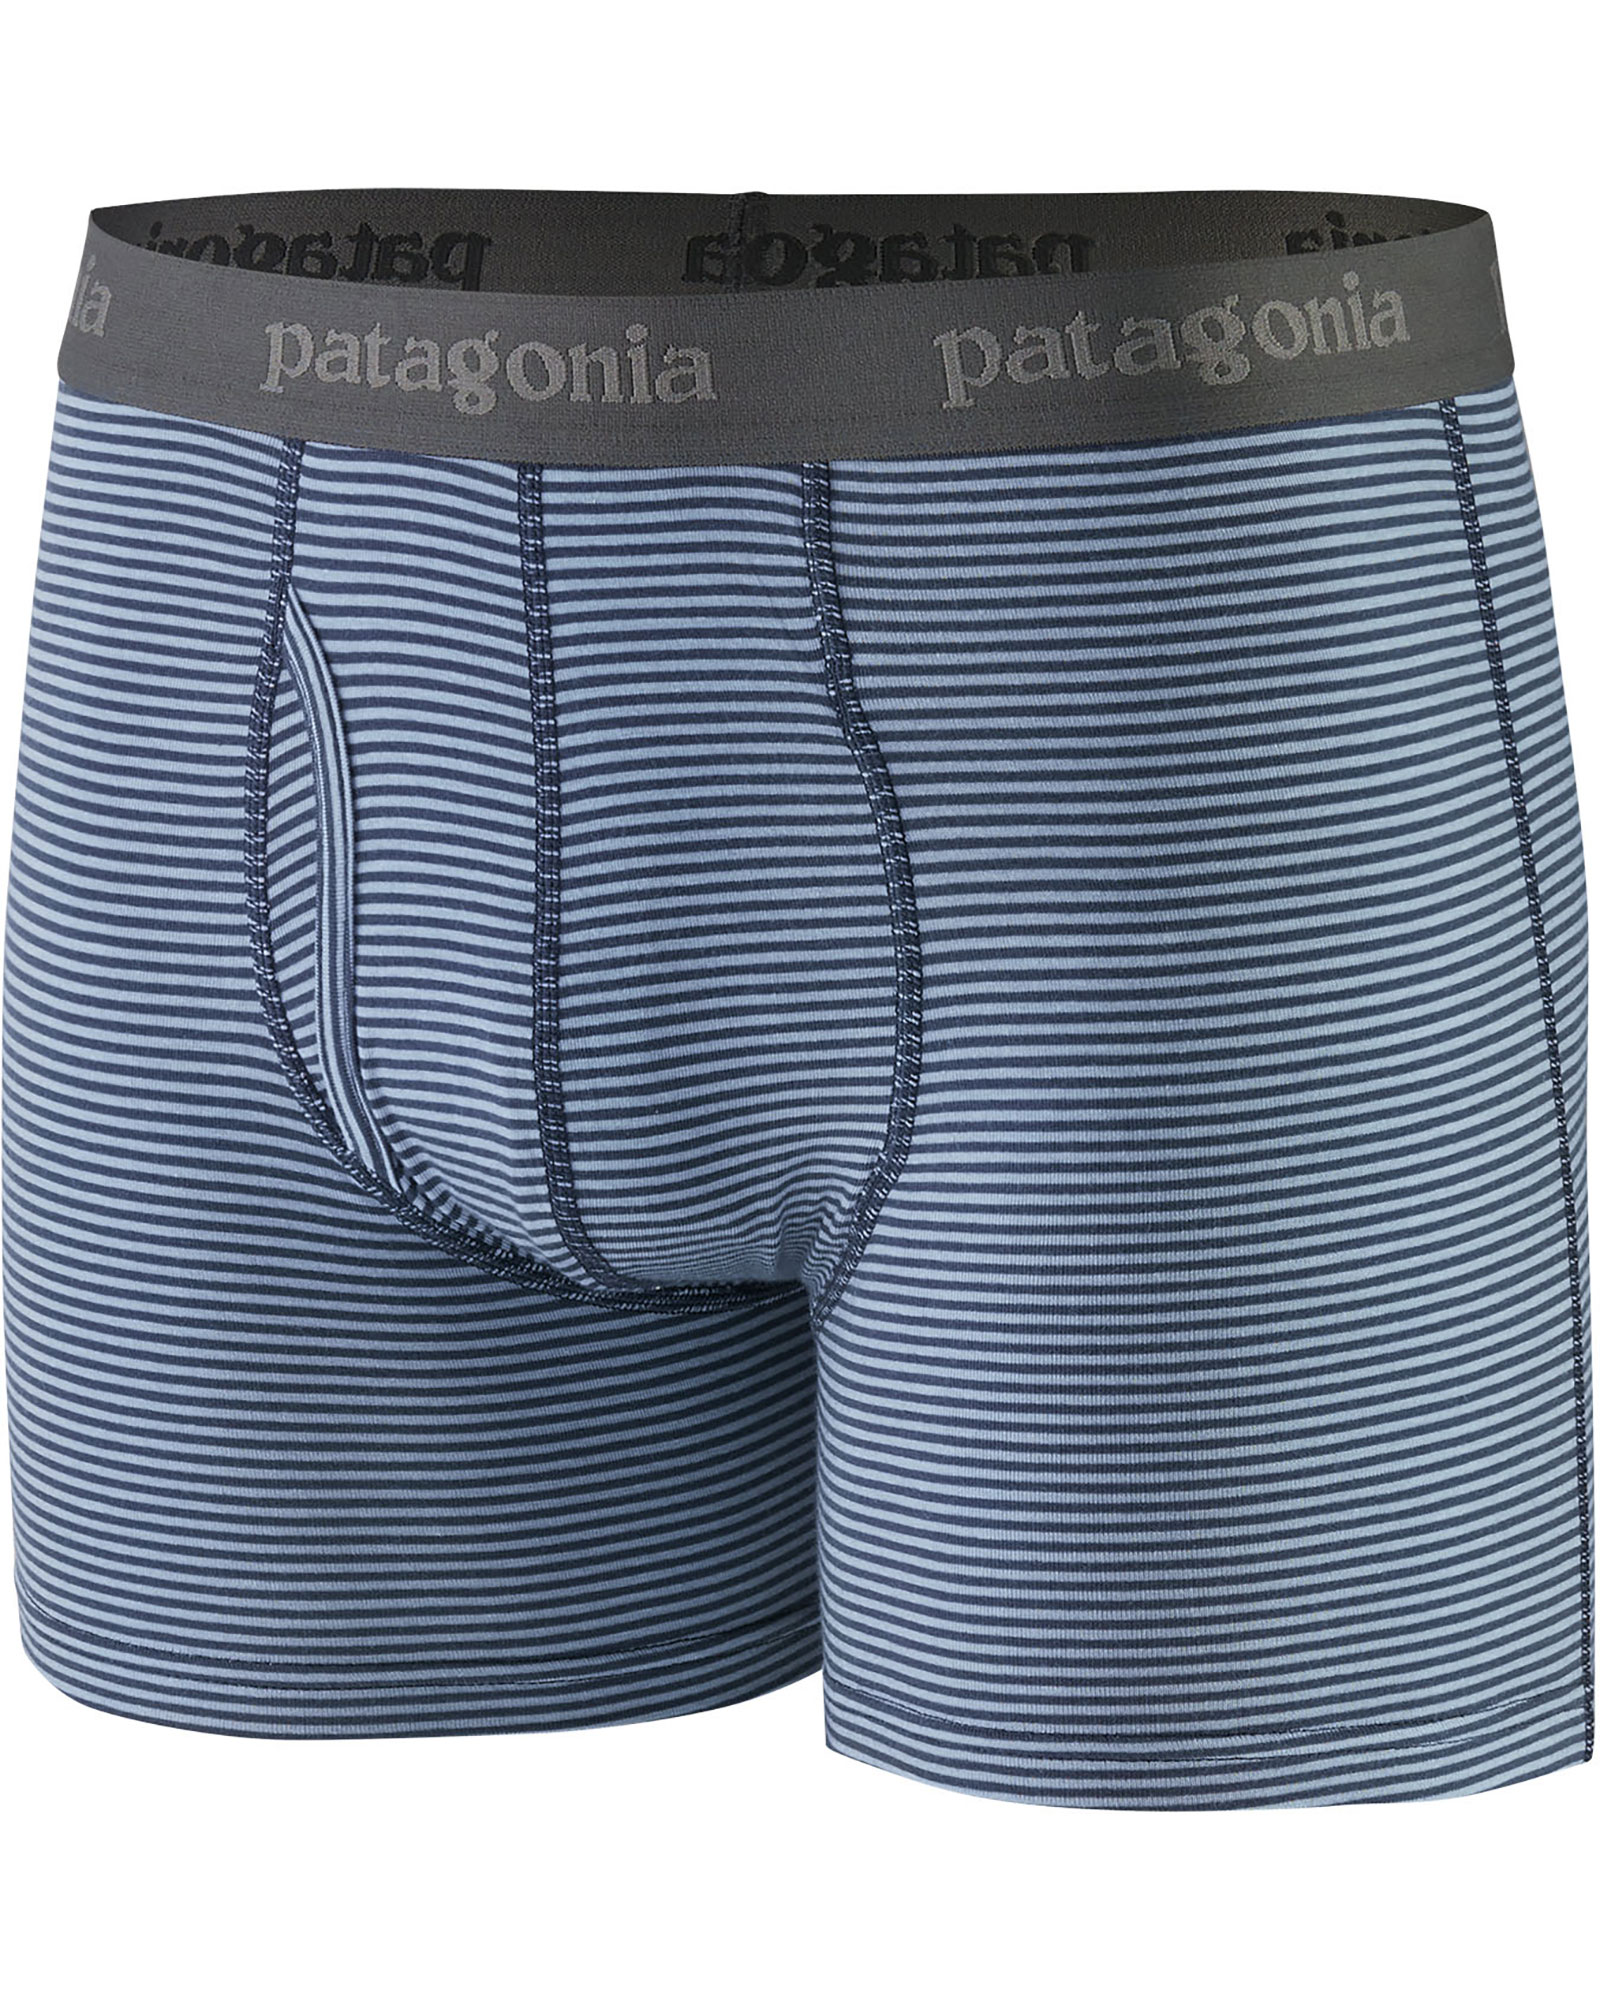 Patagonia Men’s Essential 3" Boxers - Fathom Stripe/ New Navy M